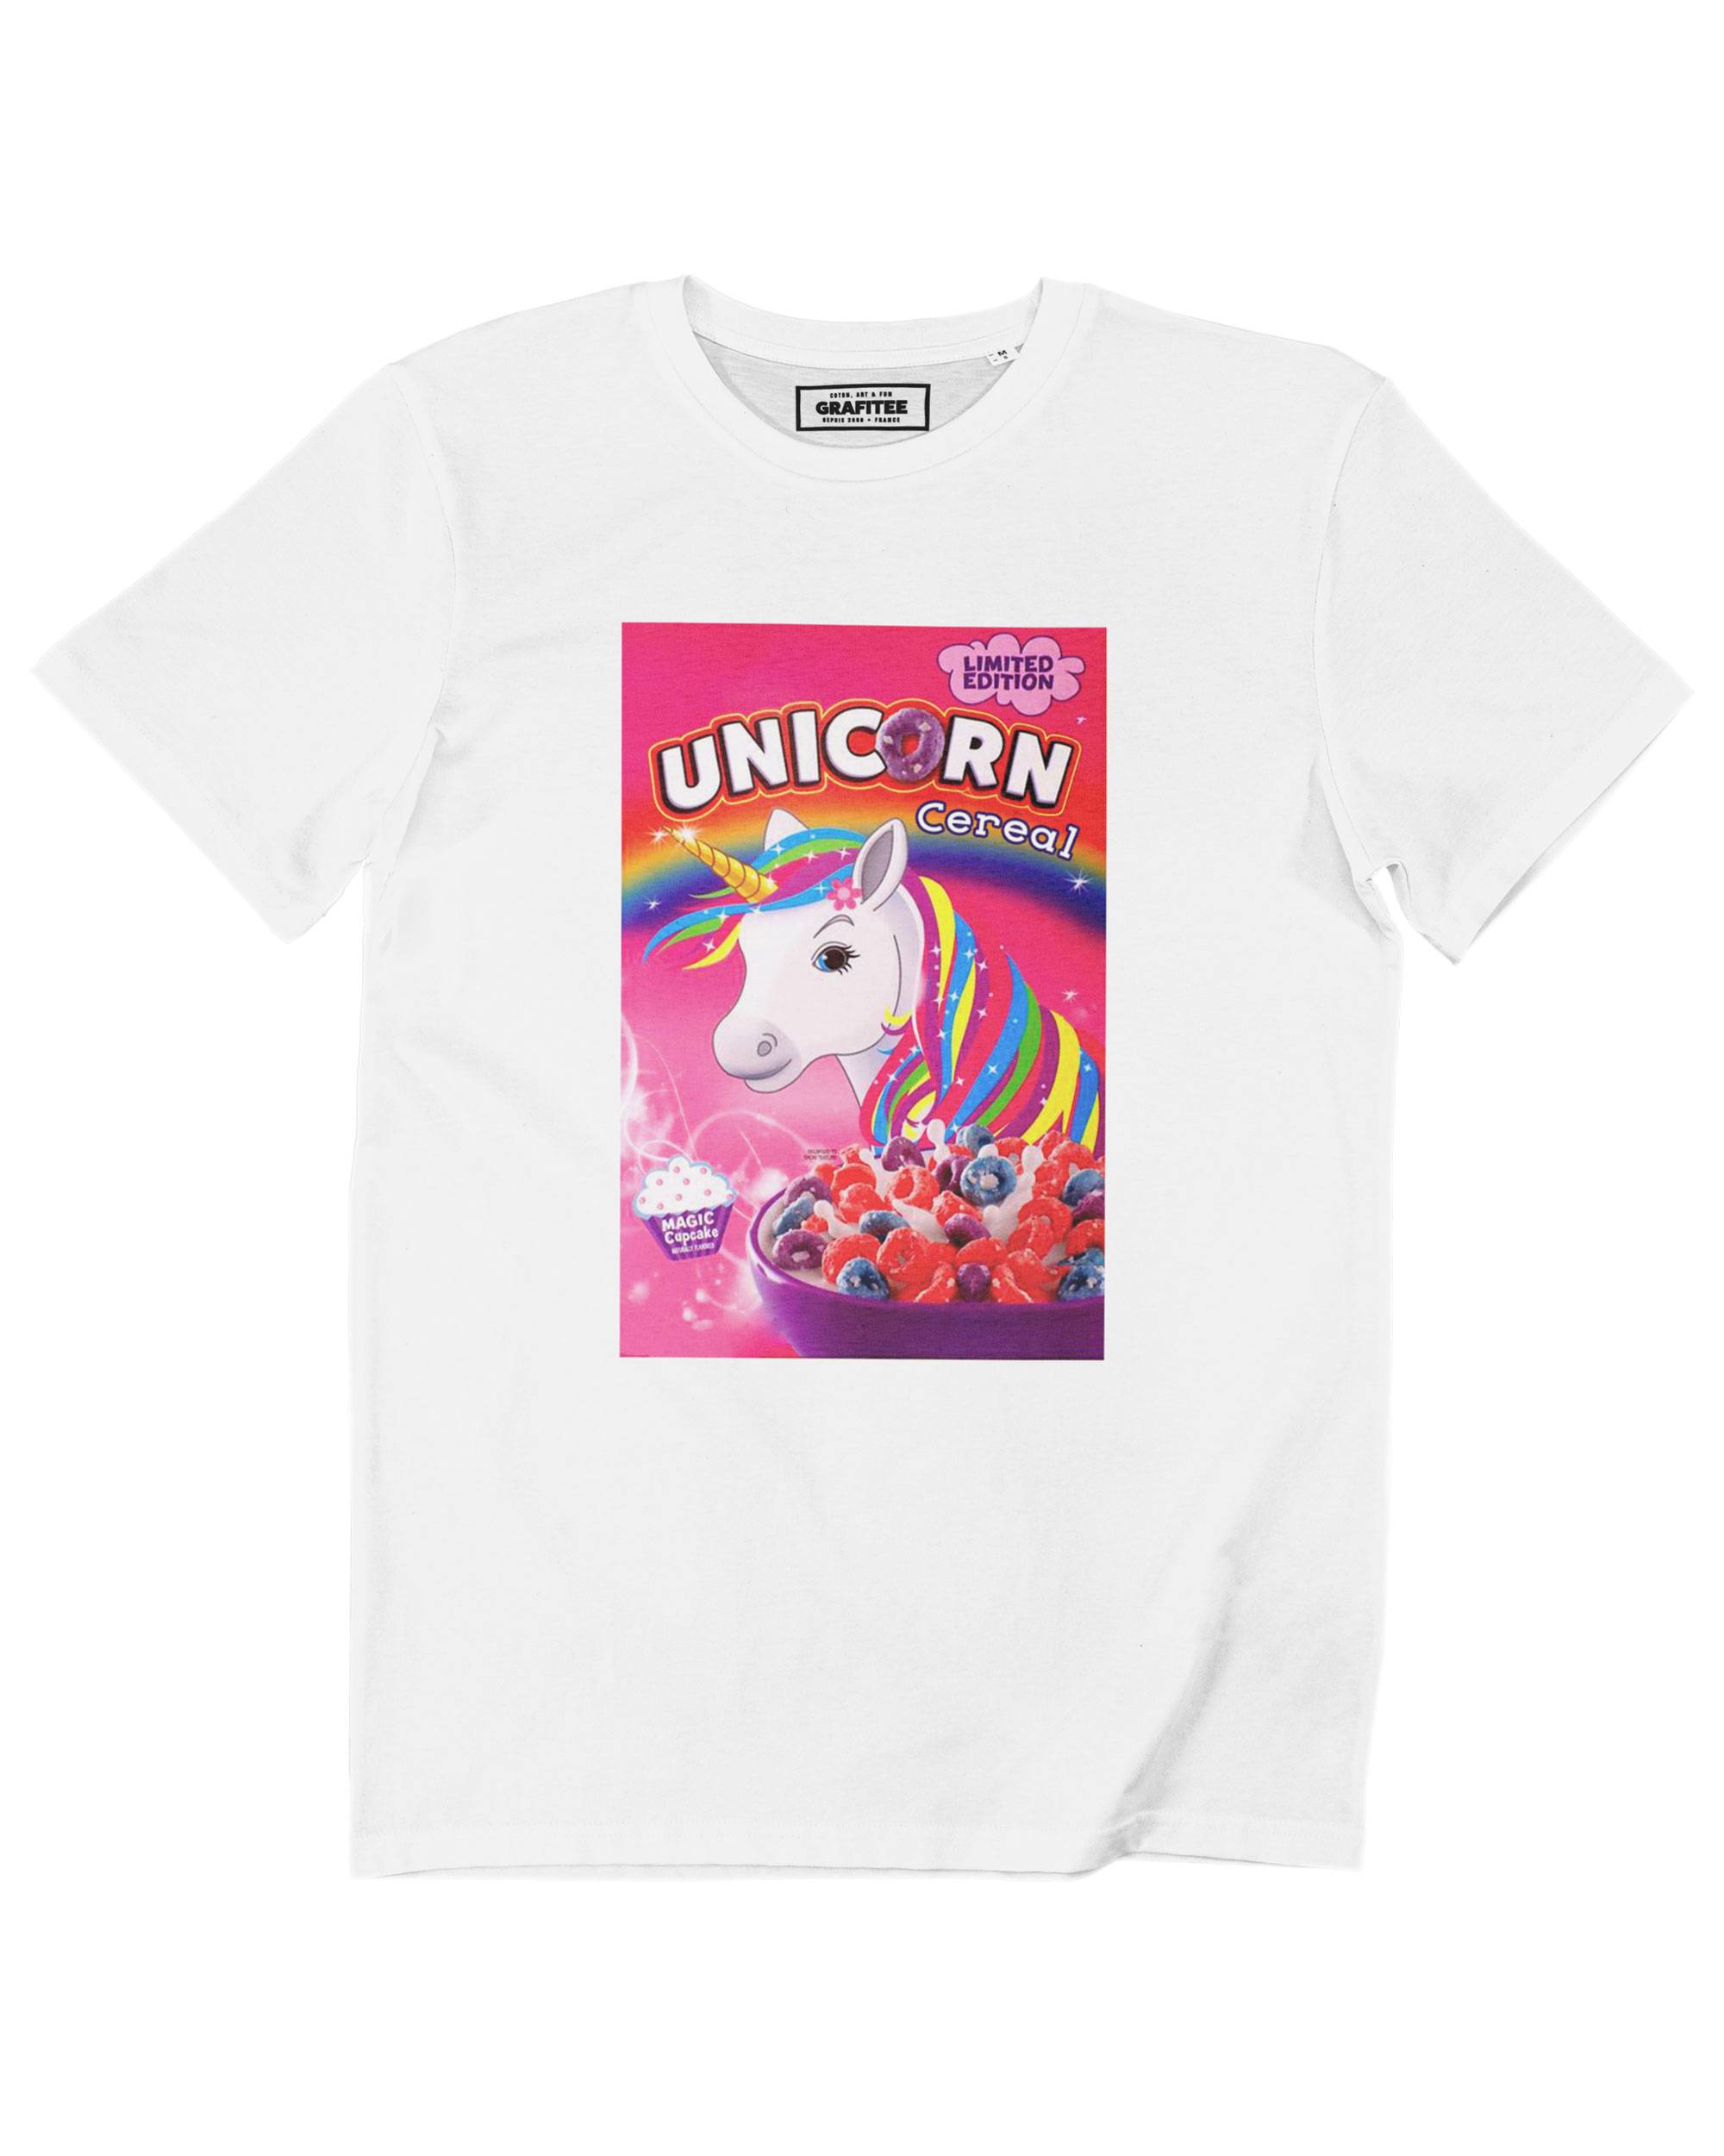 T-shirt Unicorn Cereal Grafitee